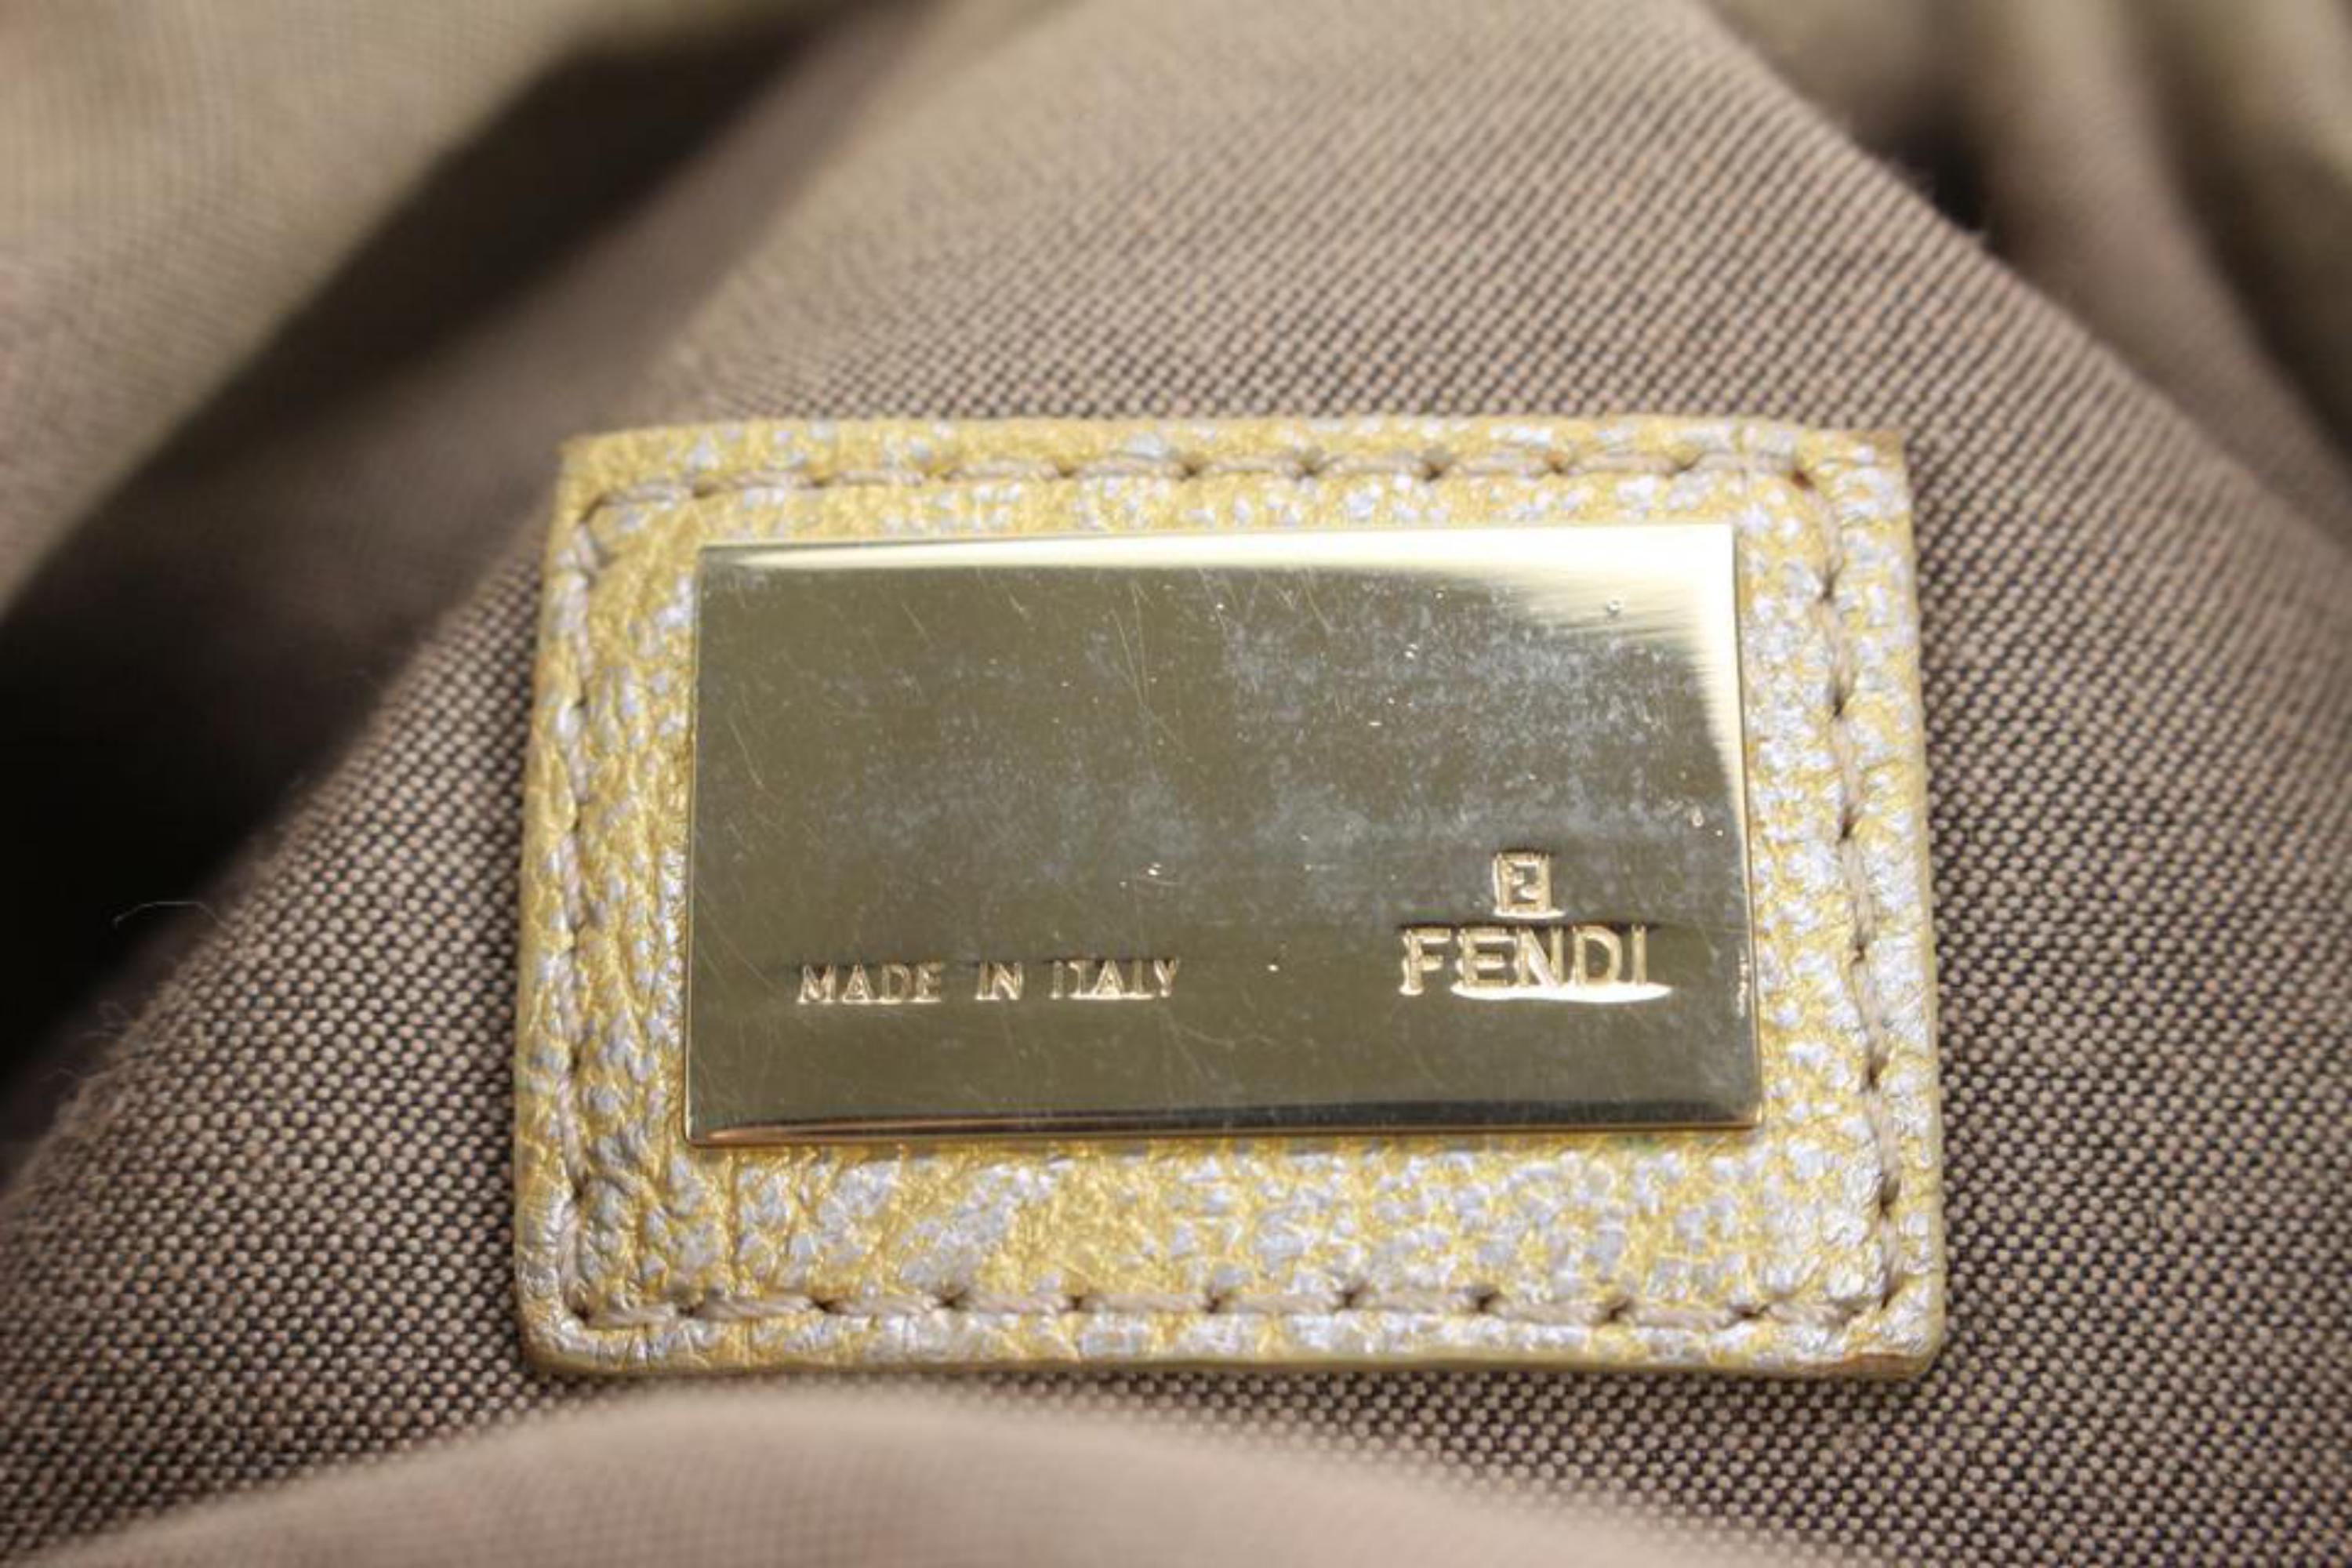 Fendi Gold Leather Spy Hobo Bag 92f525s 1